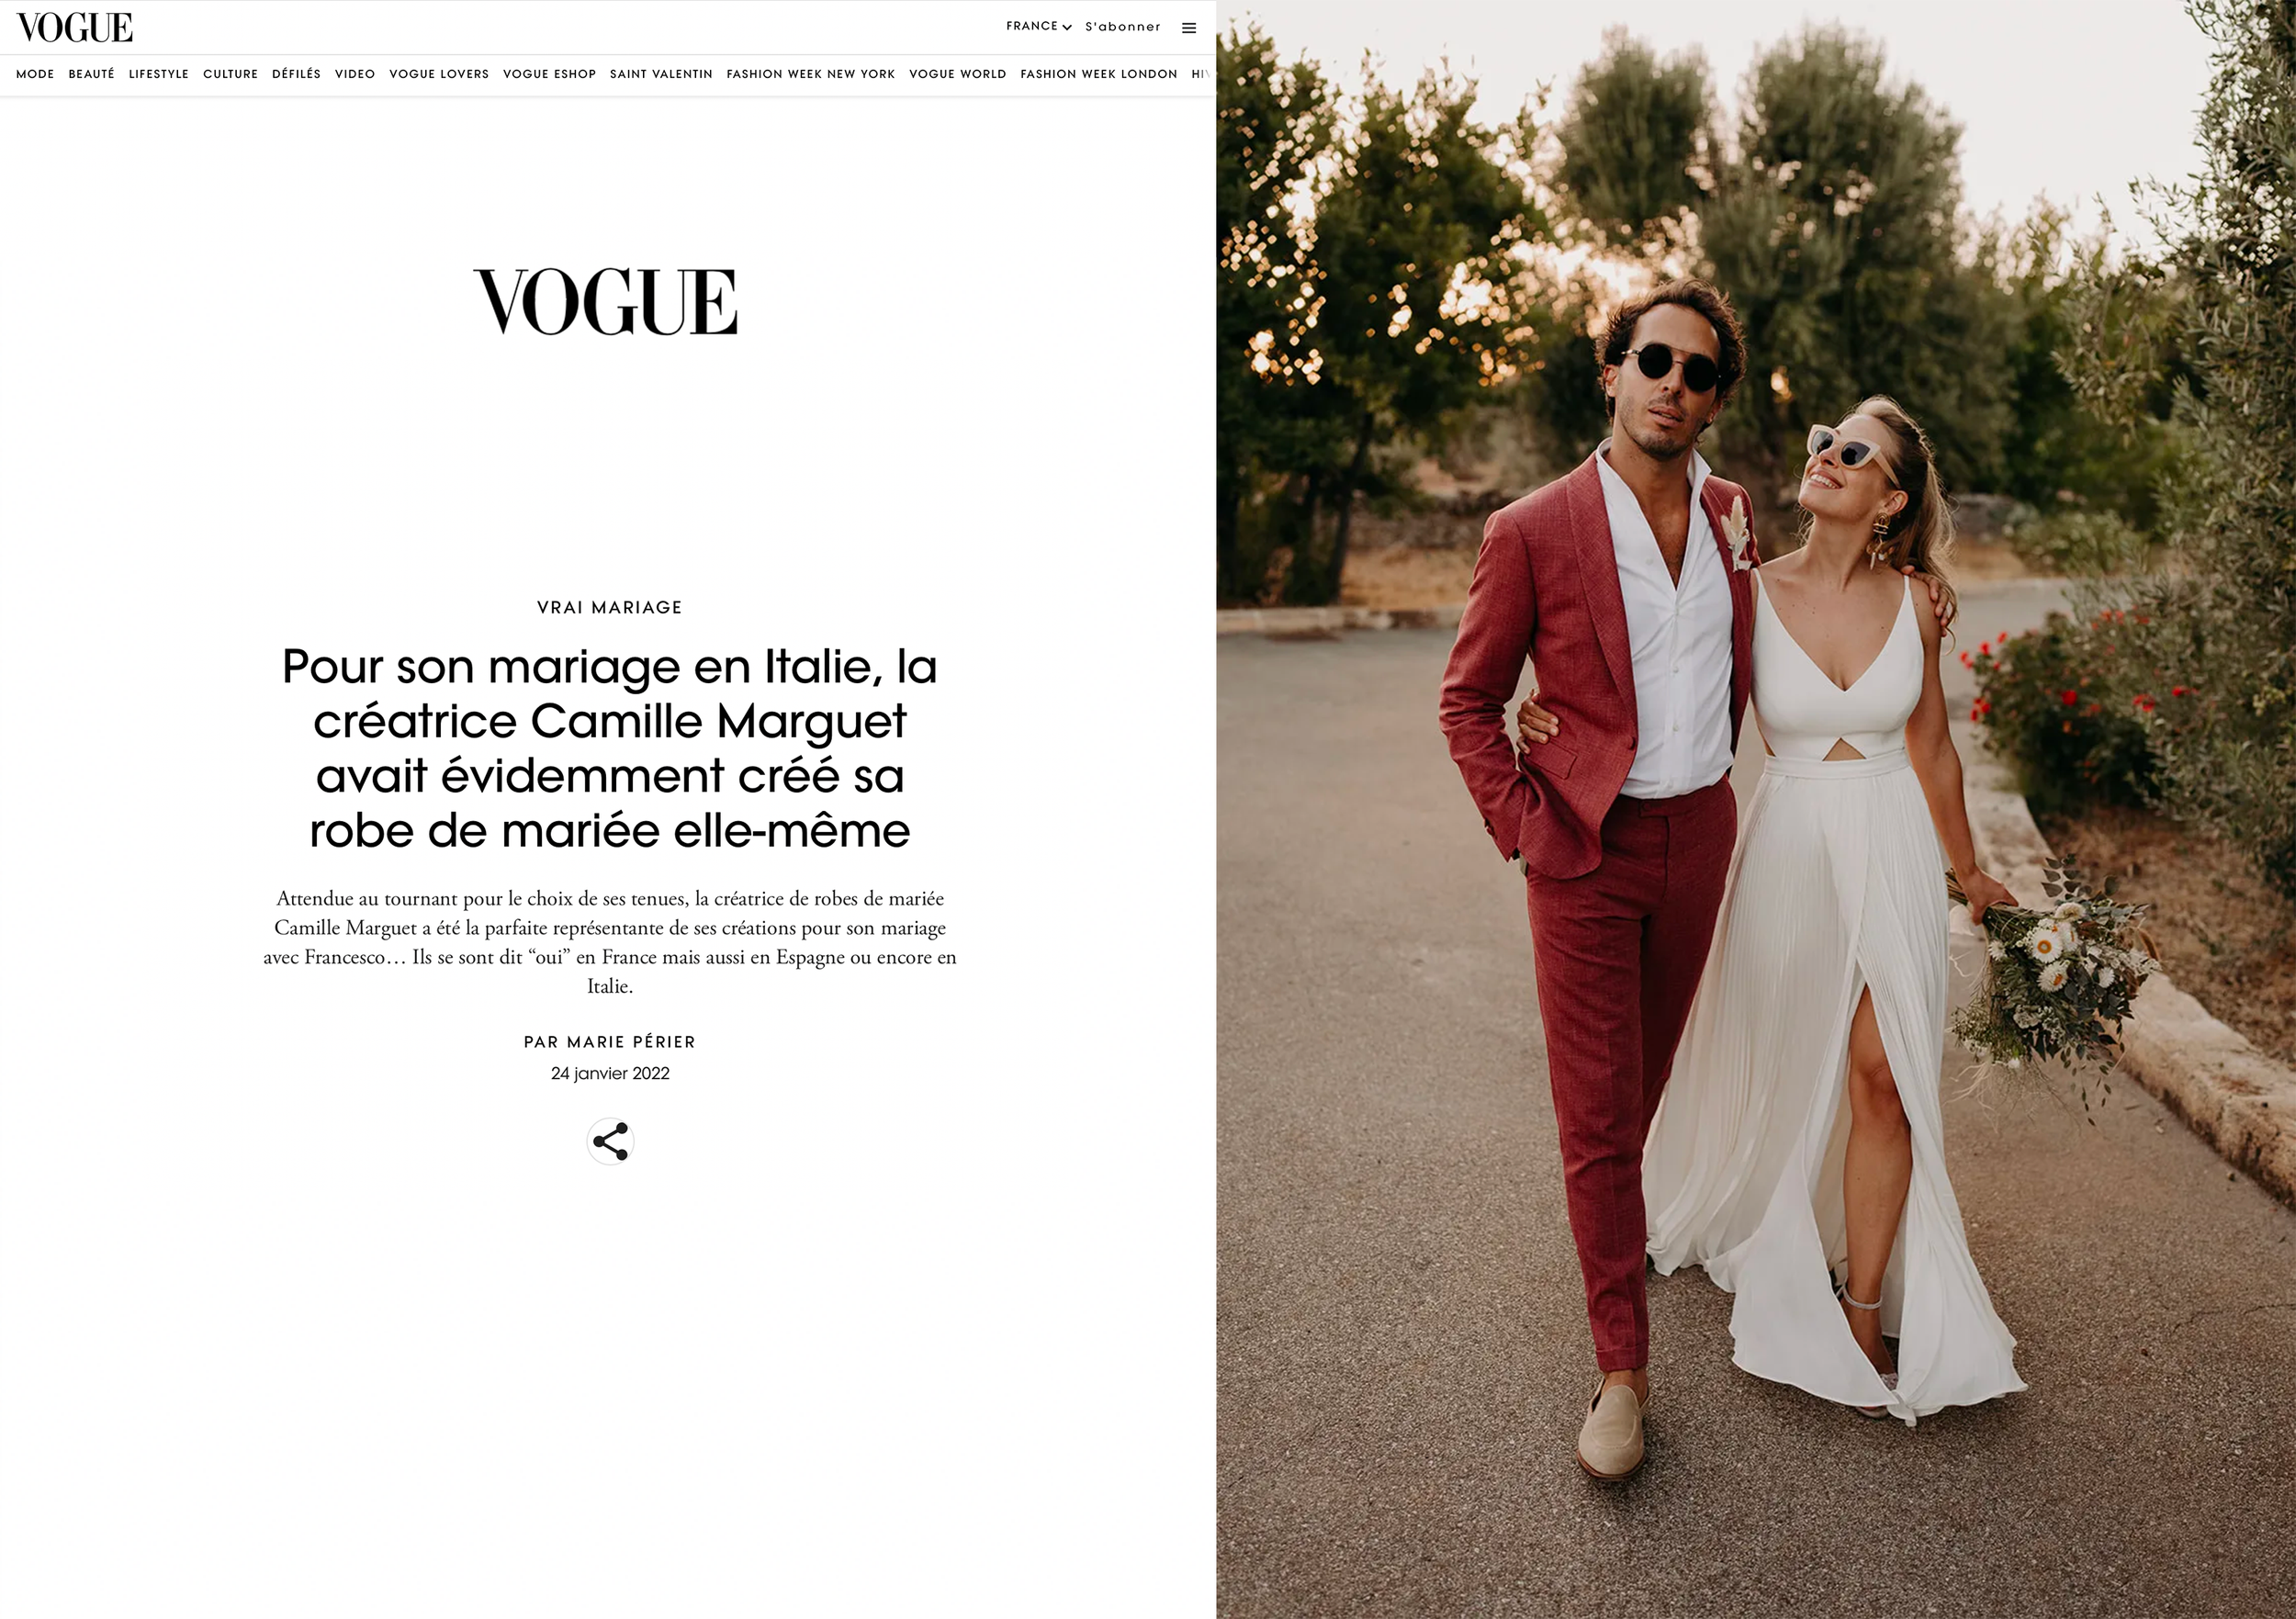 Vogue 1.png